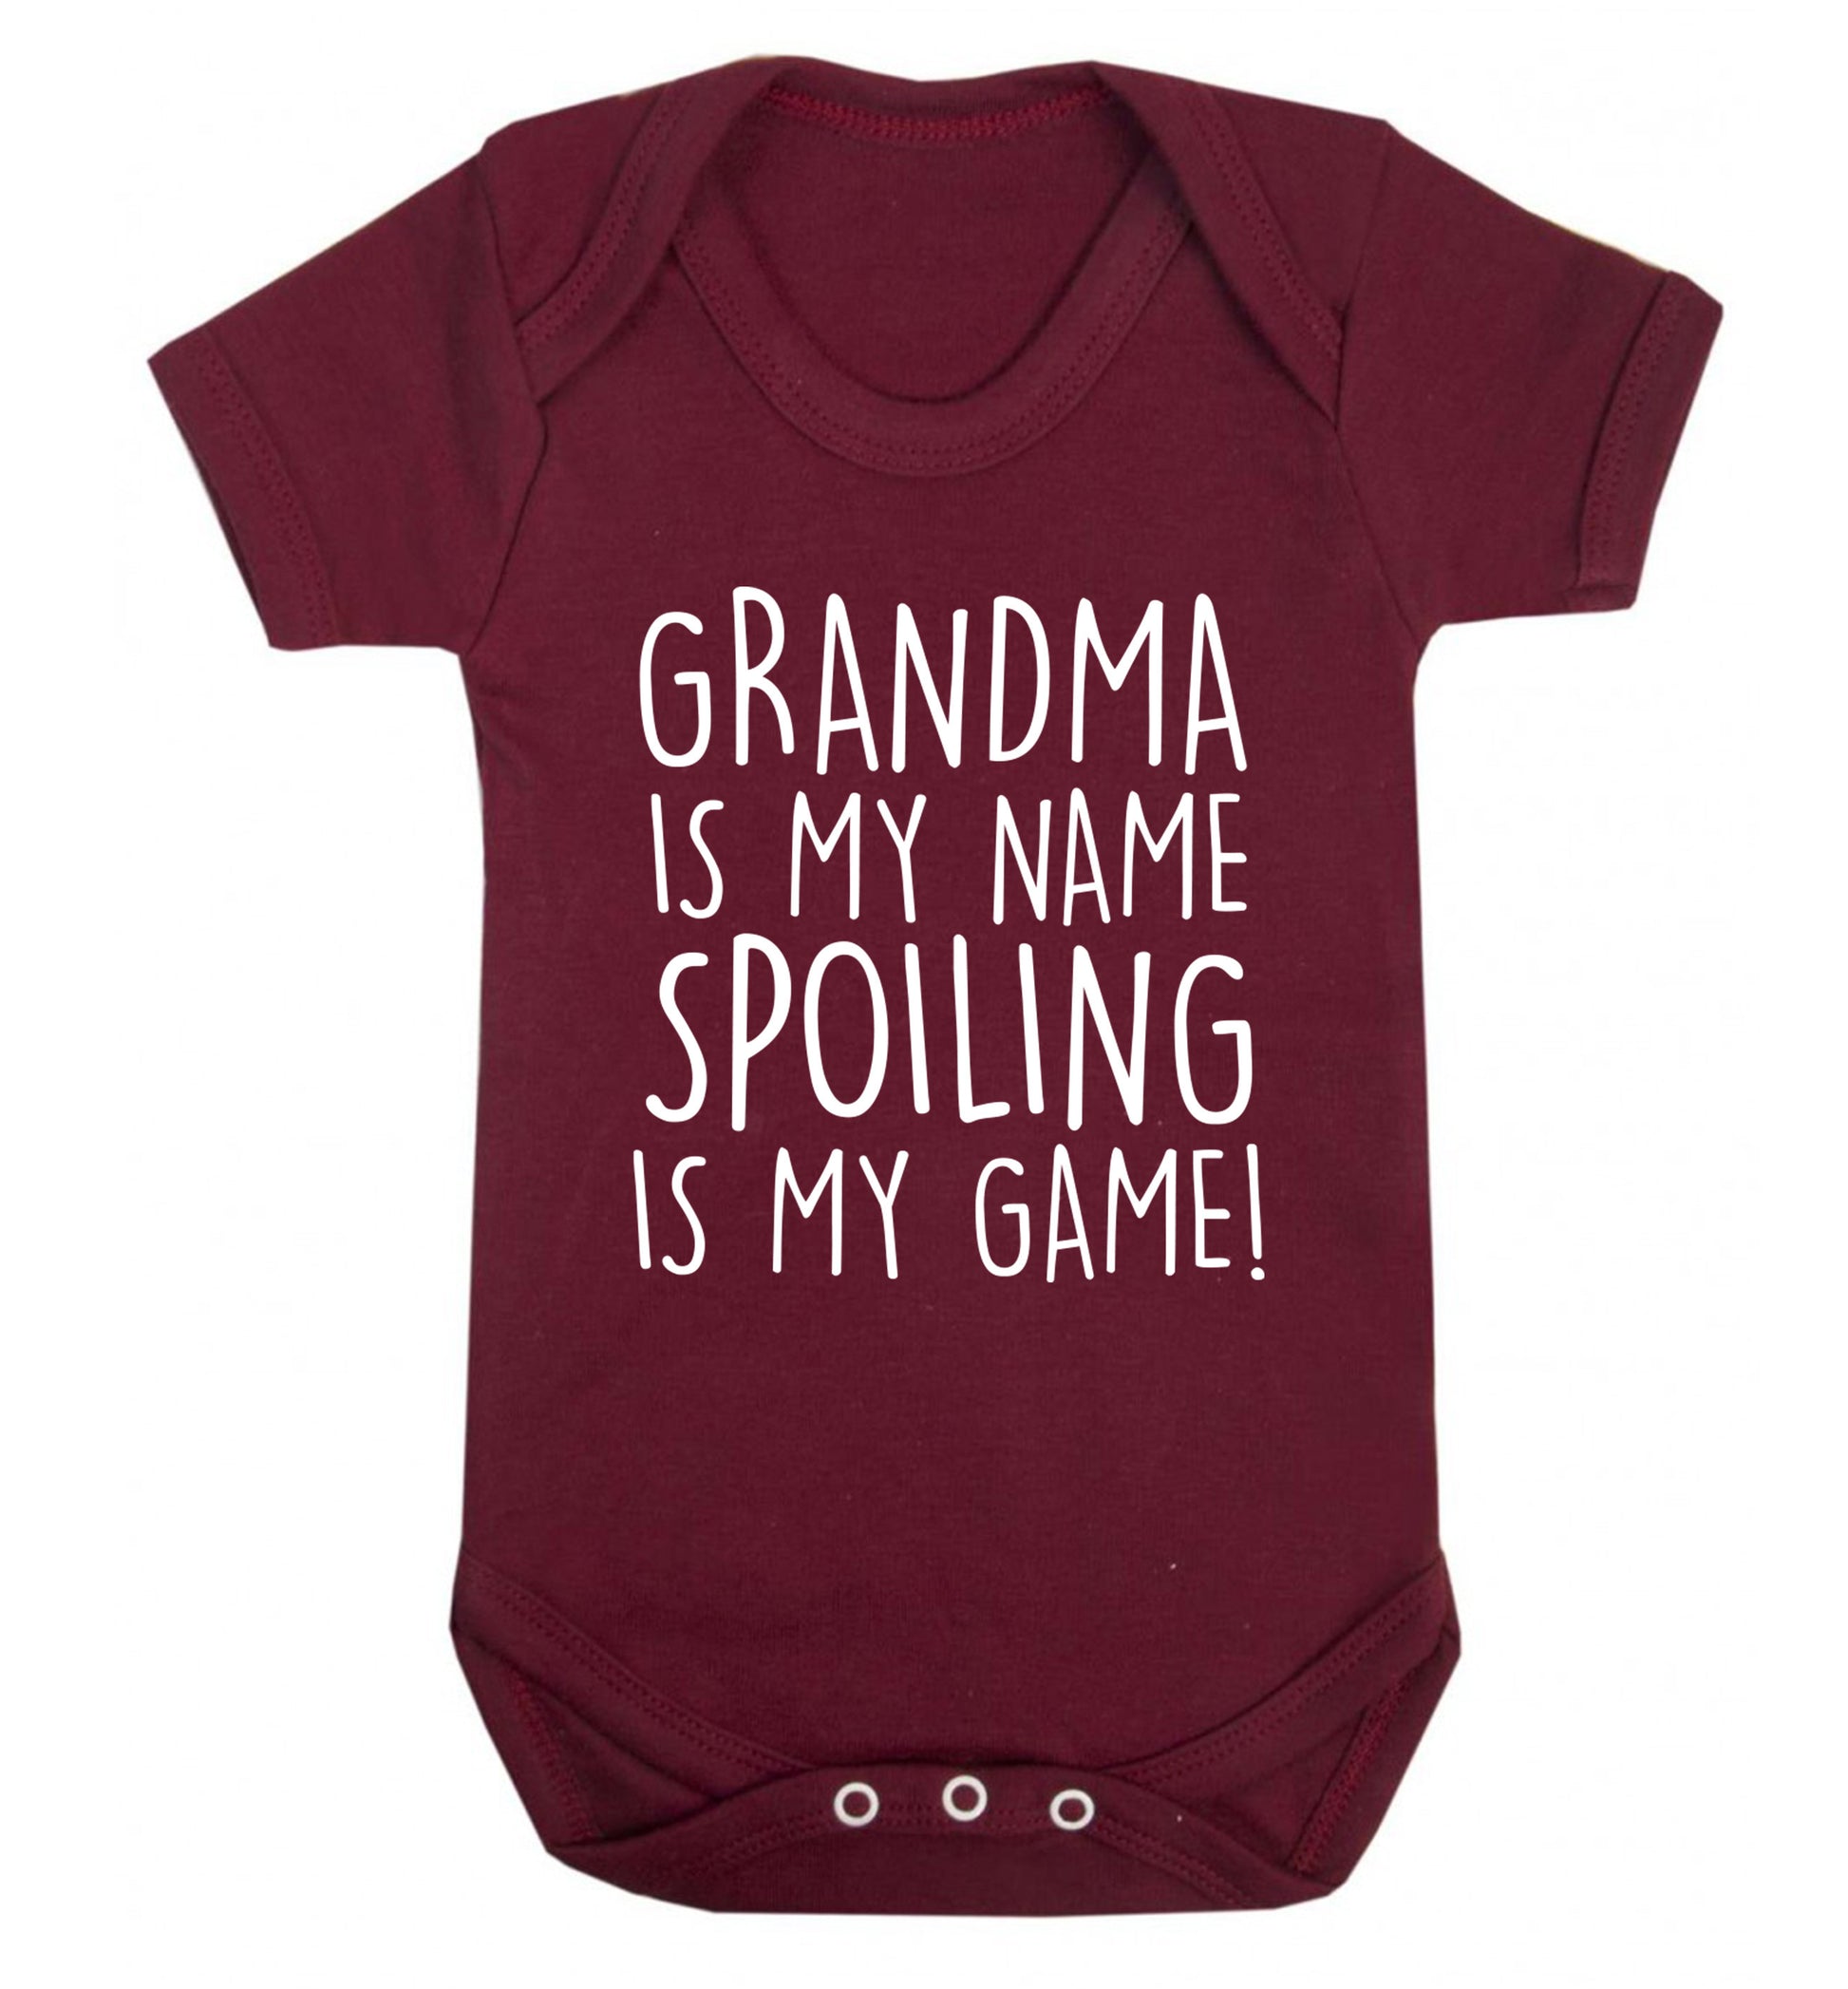 Grandma is my name, spoiling is my game Baby Vest maroon 18-24 months